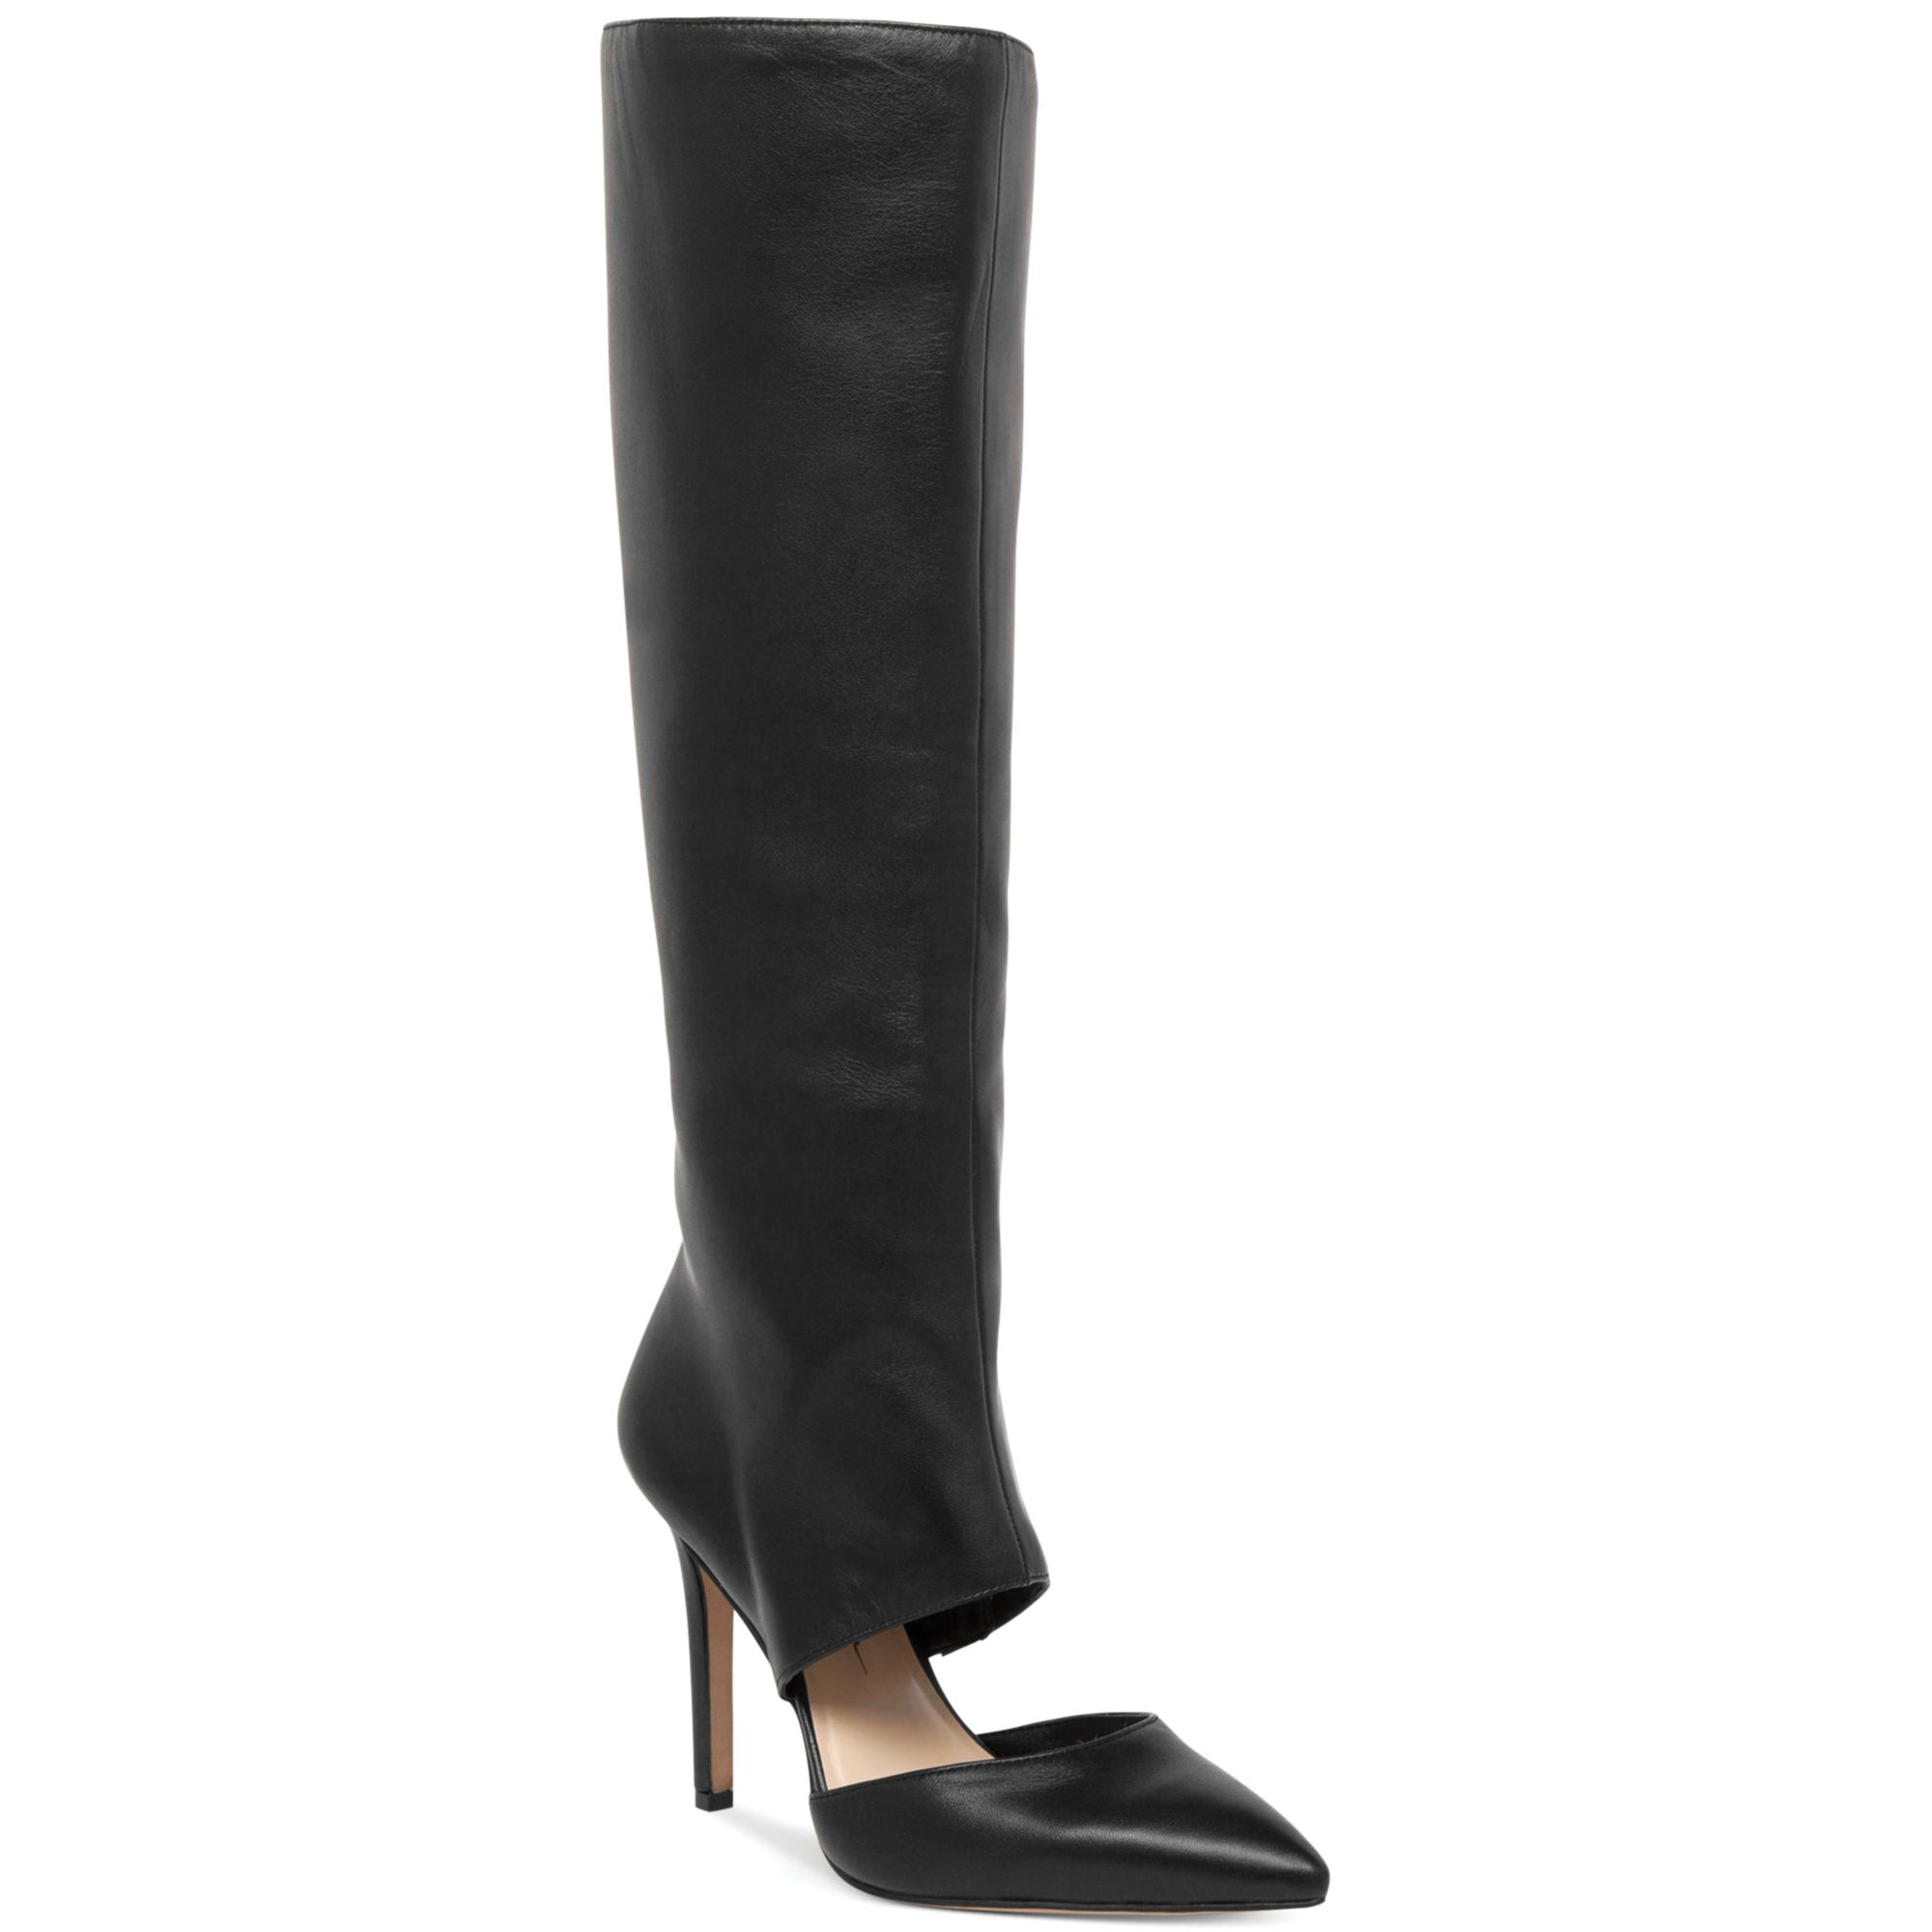 Jessica simpson Cardona Chop Out Boots in Black (Black/Black) | Lyst